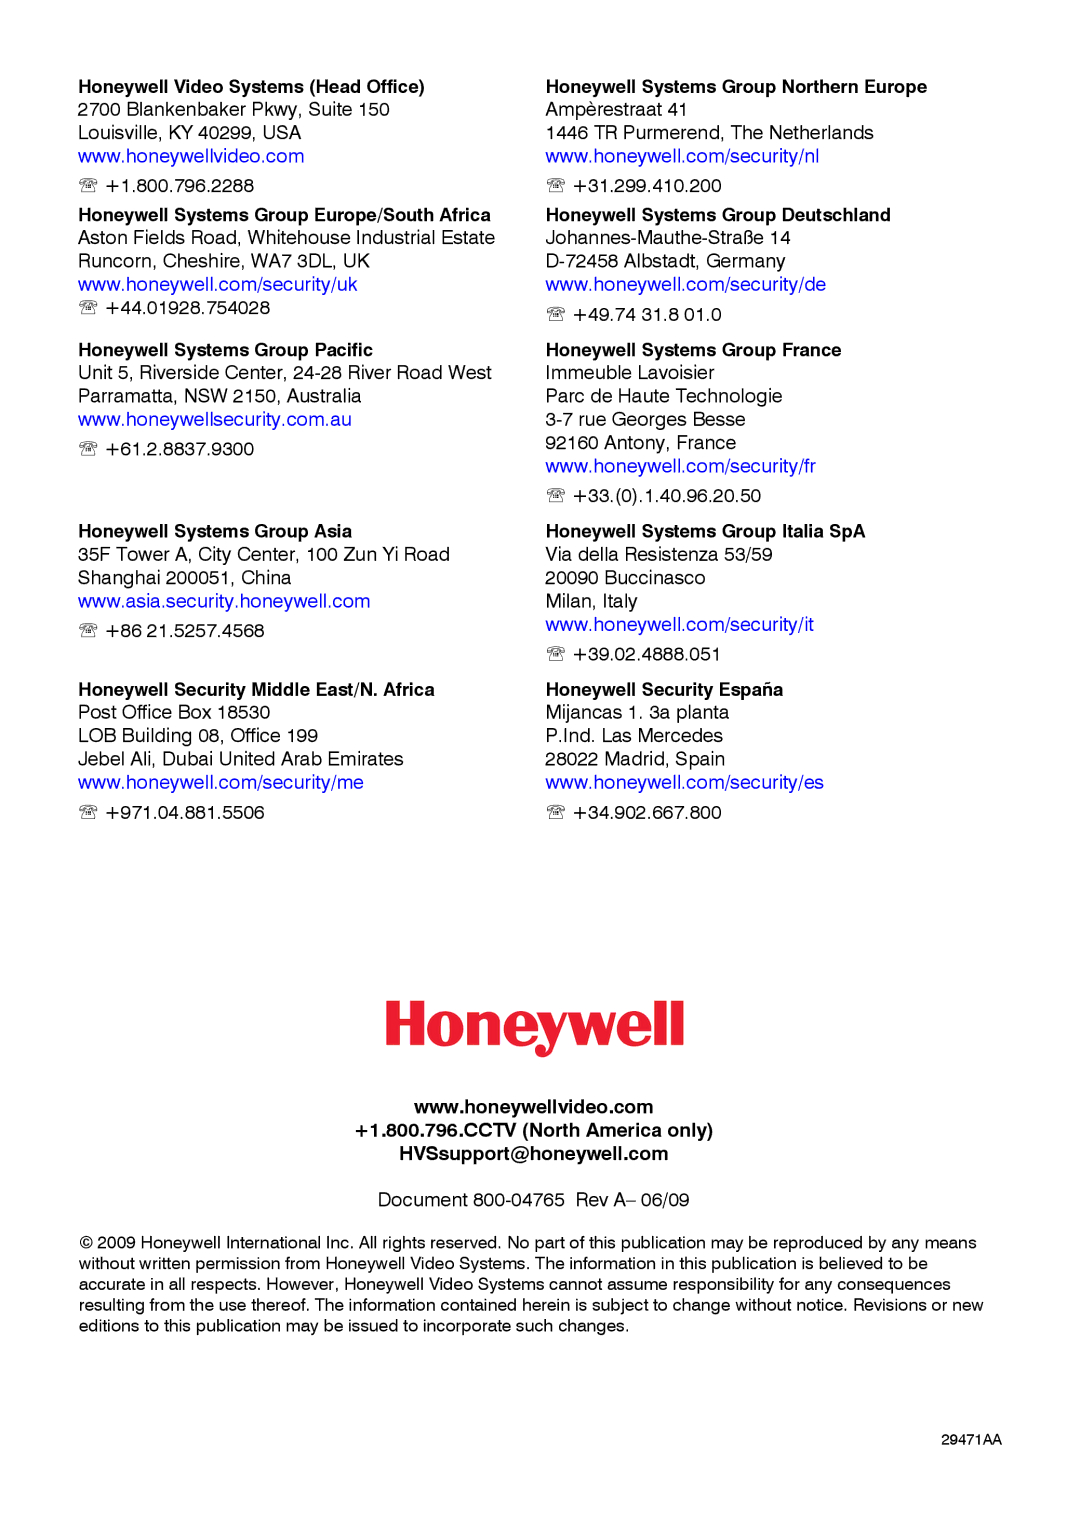 Honeywell HRDPX manual +1.800.796.CCTV North America only HVSsupport@honeywell.com, Document 800-04765 Rev A- 06/09 